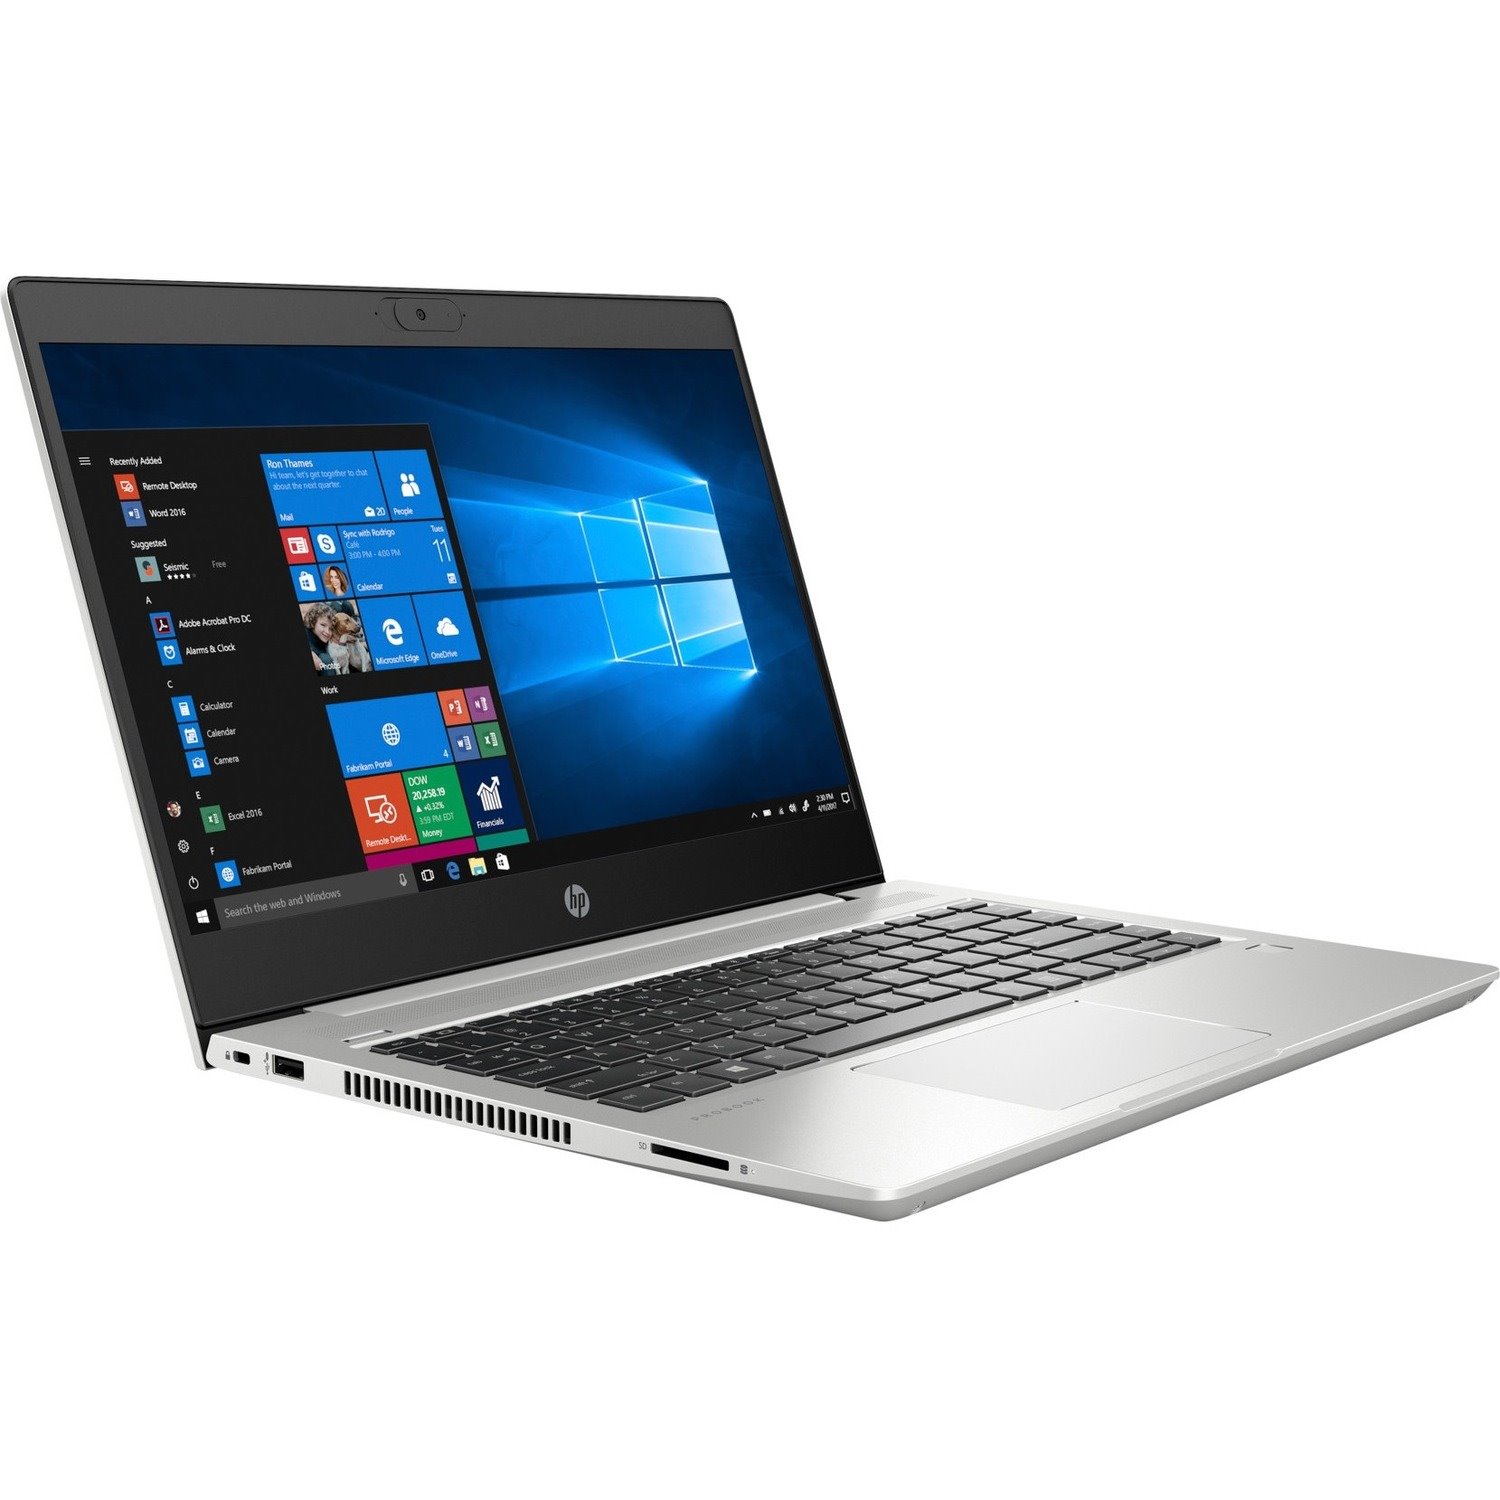 HP ProBook 455 G7 39.6 cm (15.6") Notebook - Full HD - 1920 x 1080 - AMD Ryzen 5 4500U Hexa-core (6 Core) 2.30 GHz - 8 GB Total RAM - 256 GB SSD - Silver, Black